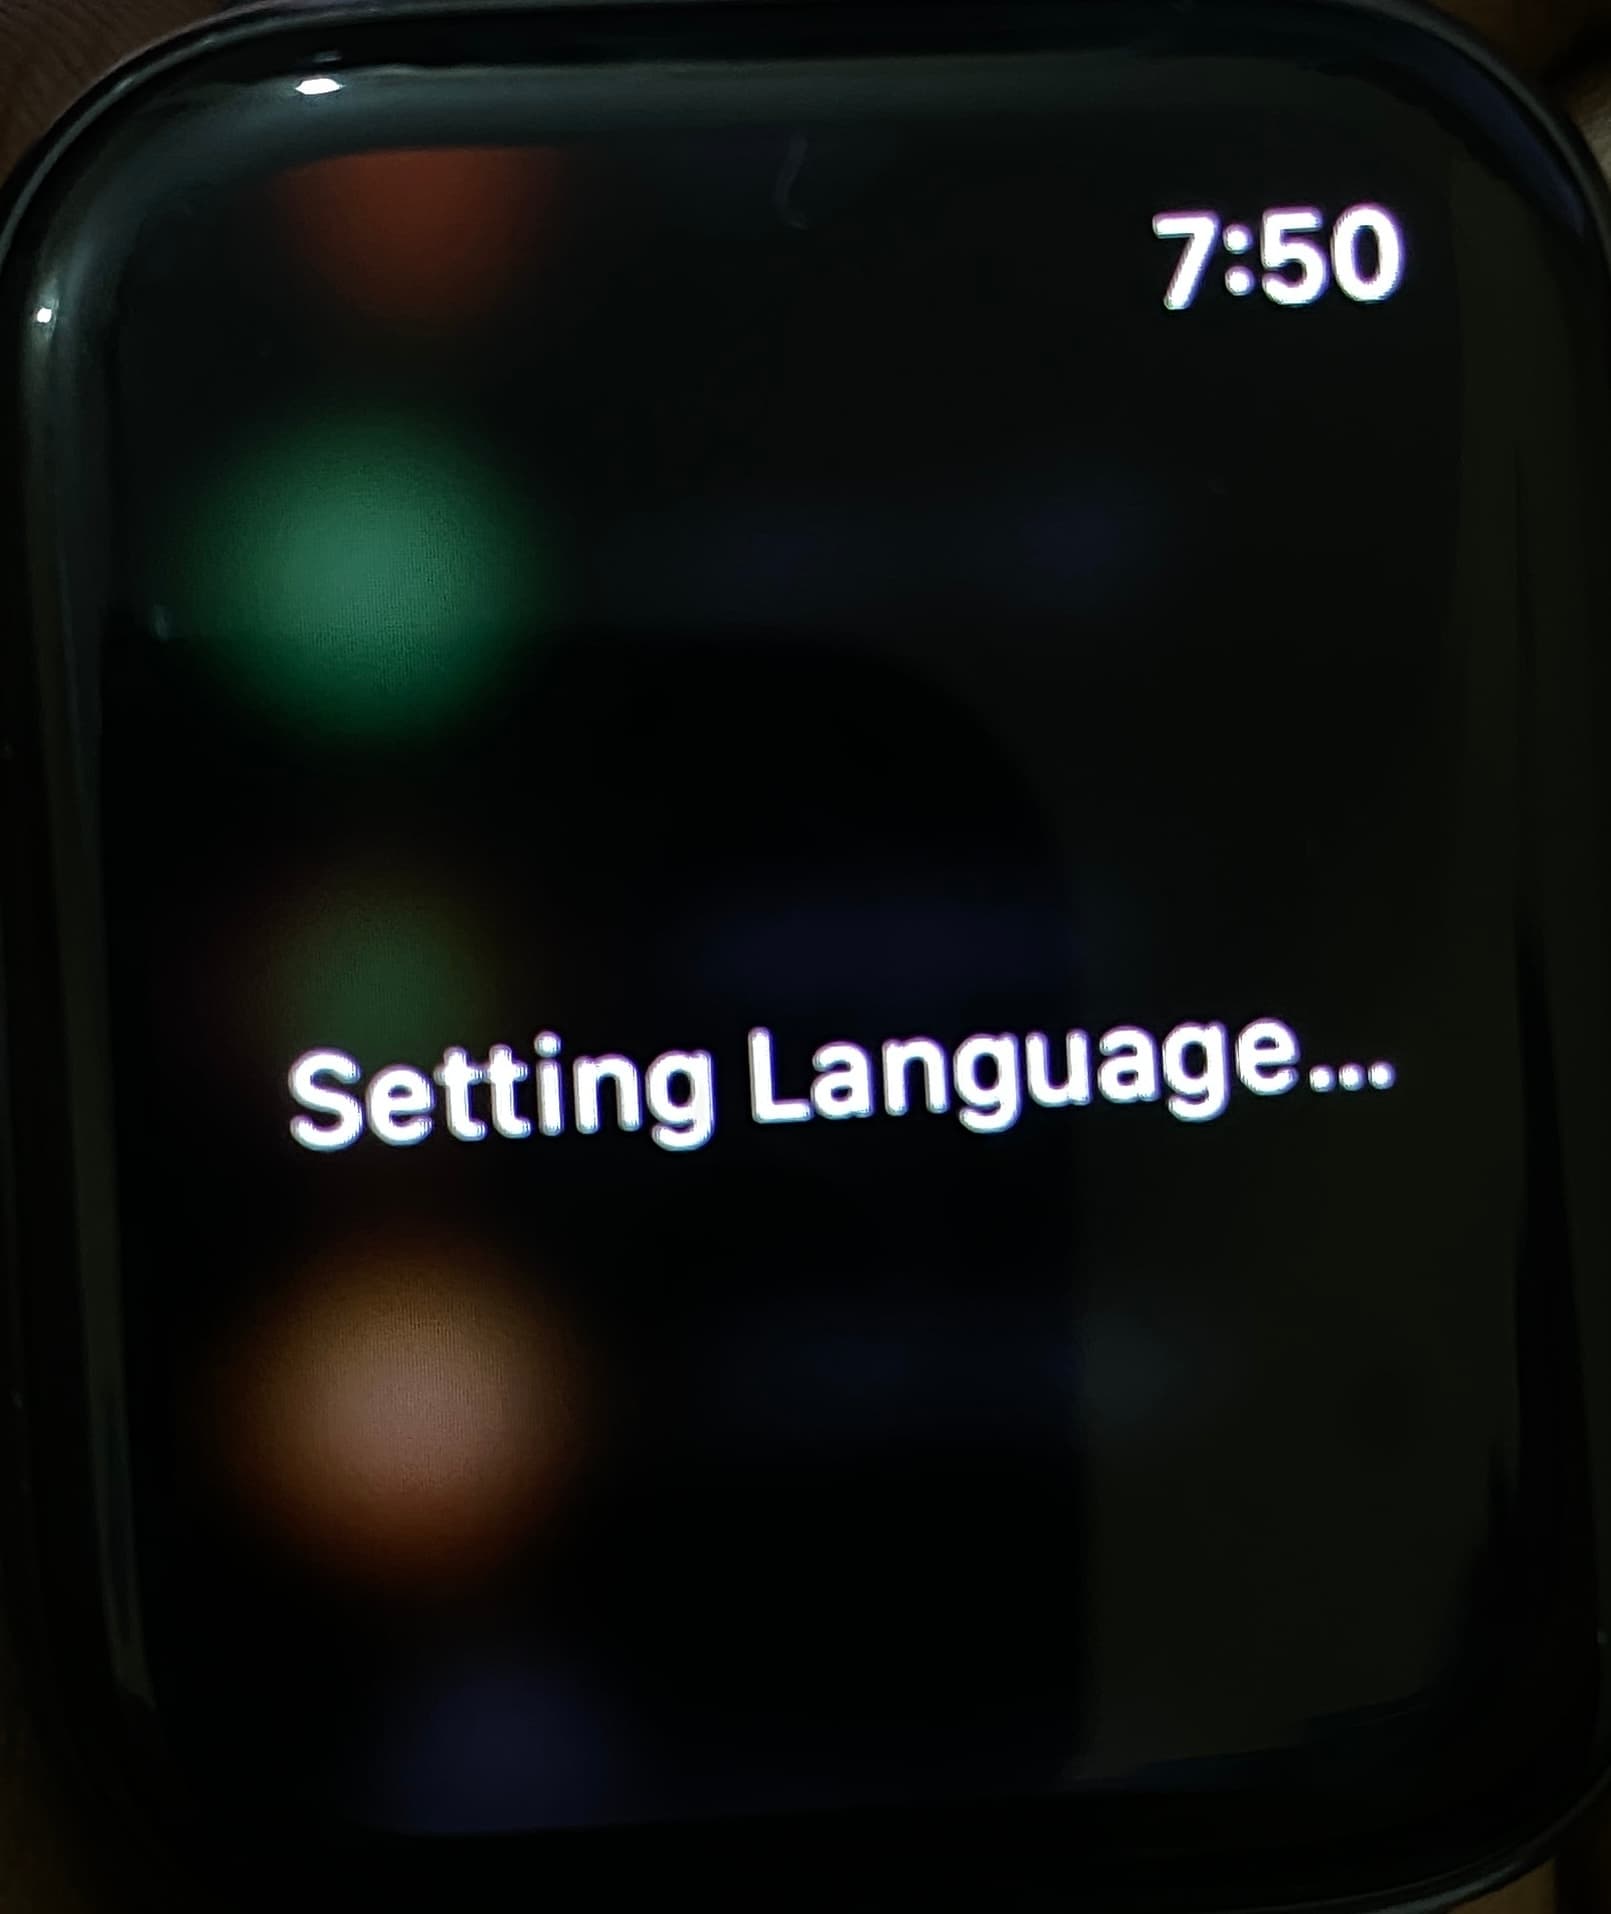 Apple Watch stuck on Setting Language screen